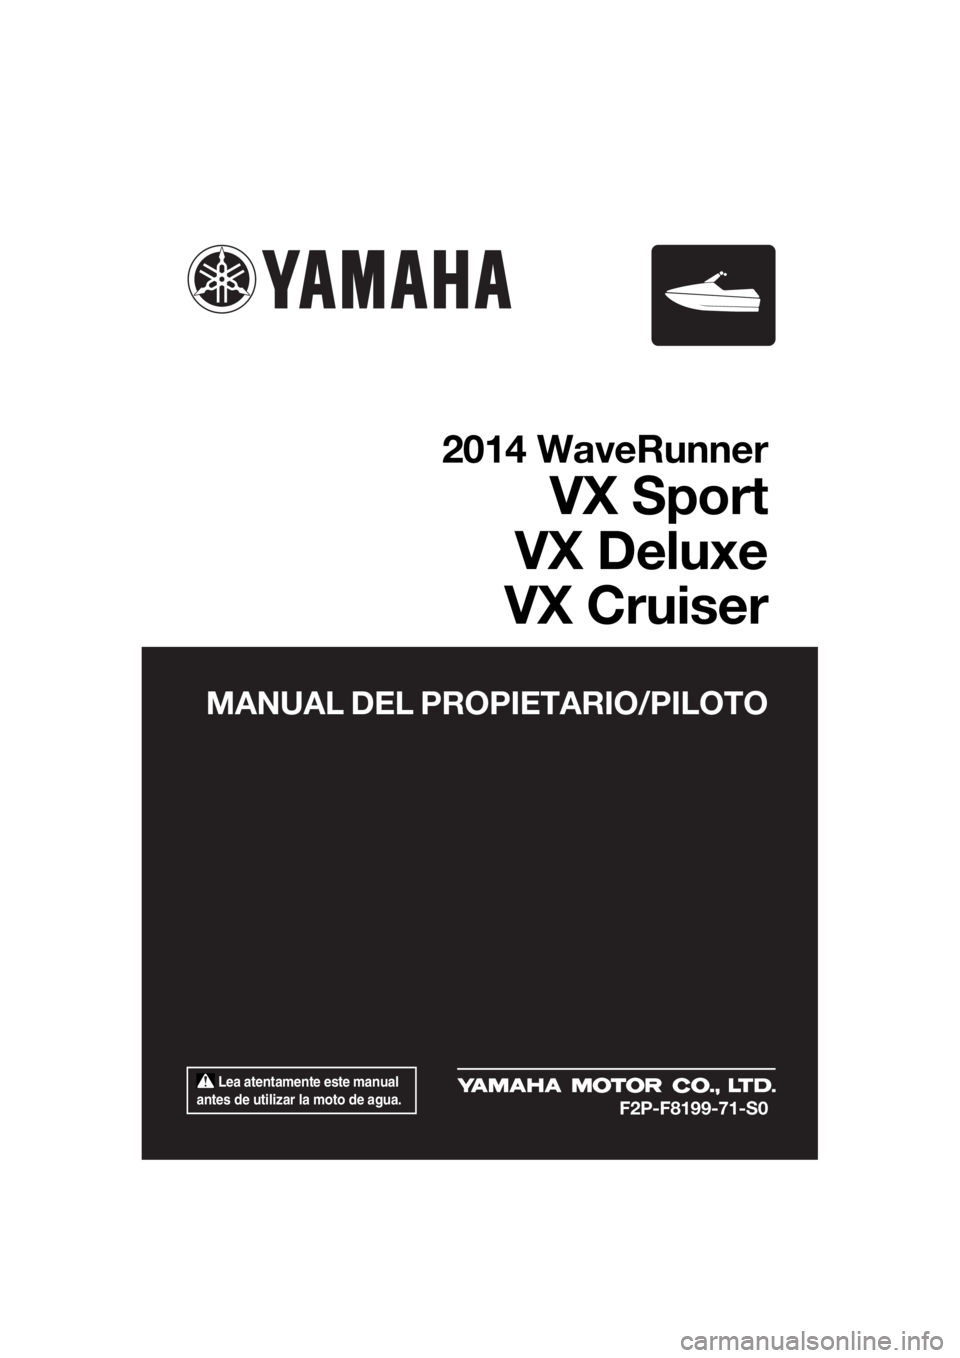 YAMAHA VX 2014  Manuale de Empleo (in Spanish) 